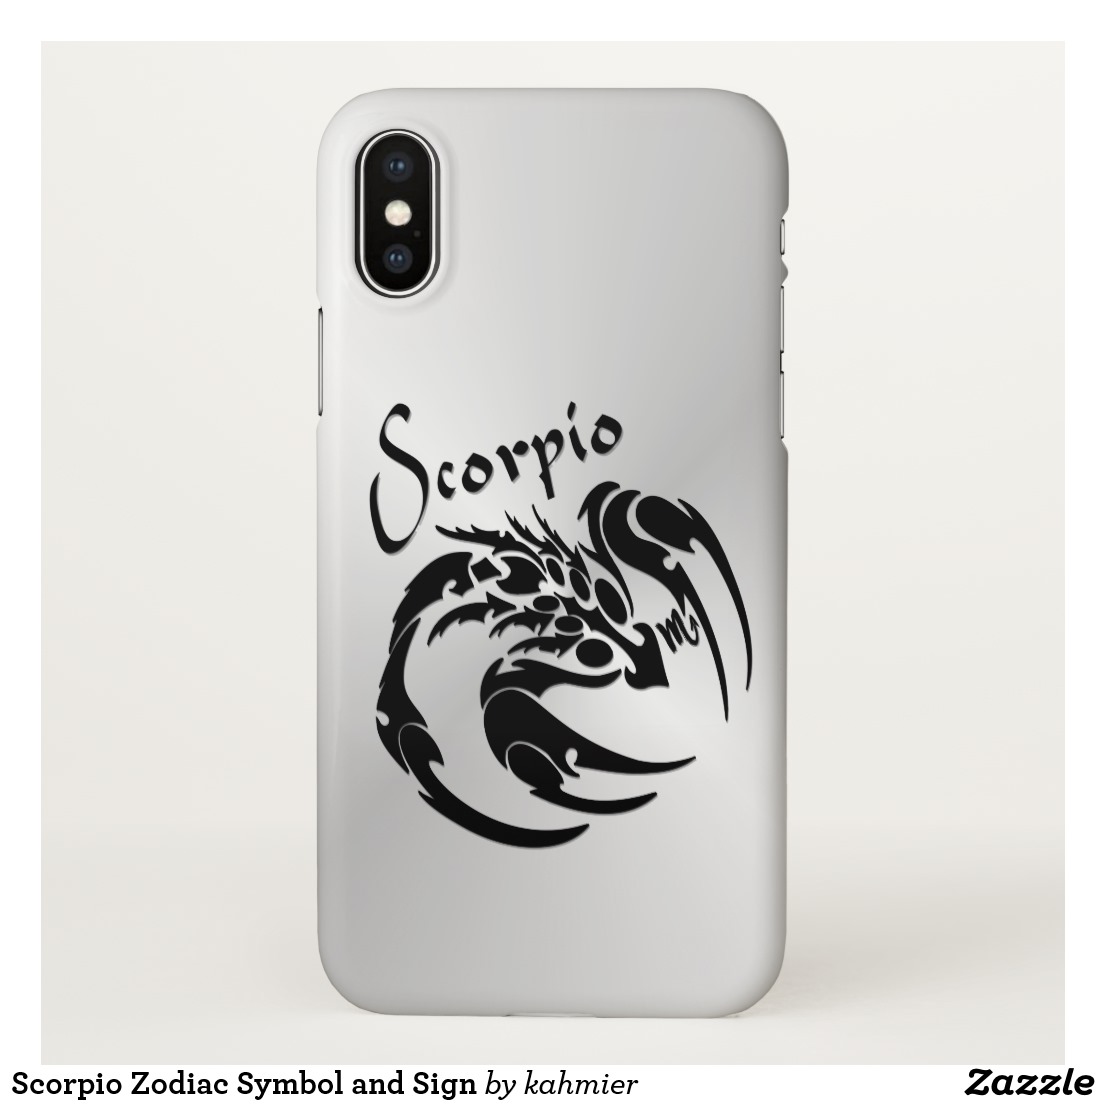 Scorpio Zodiac Symbol and Sign iPhone Case